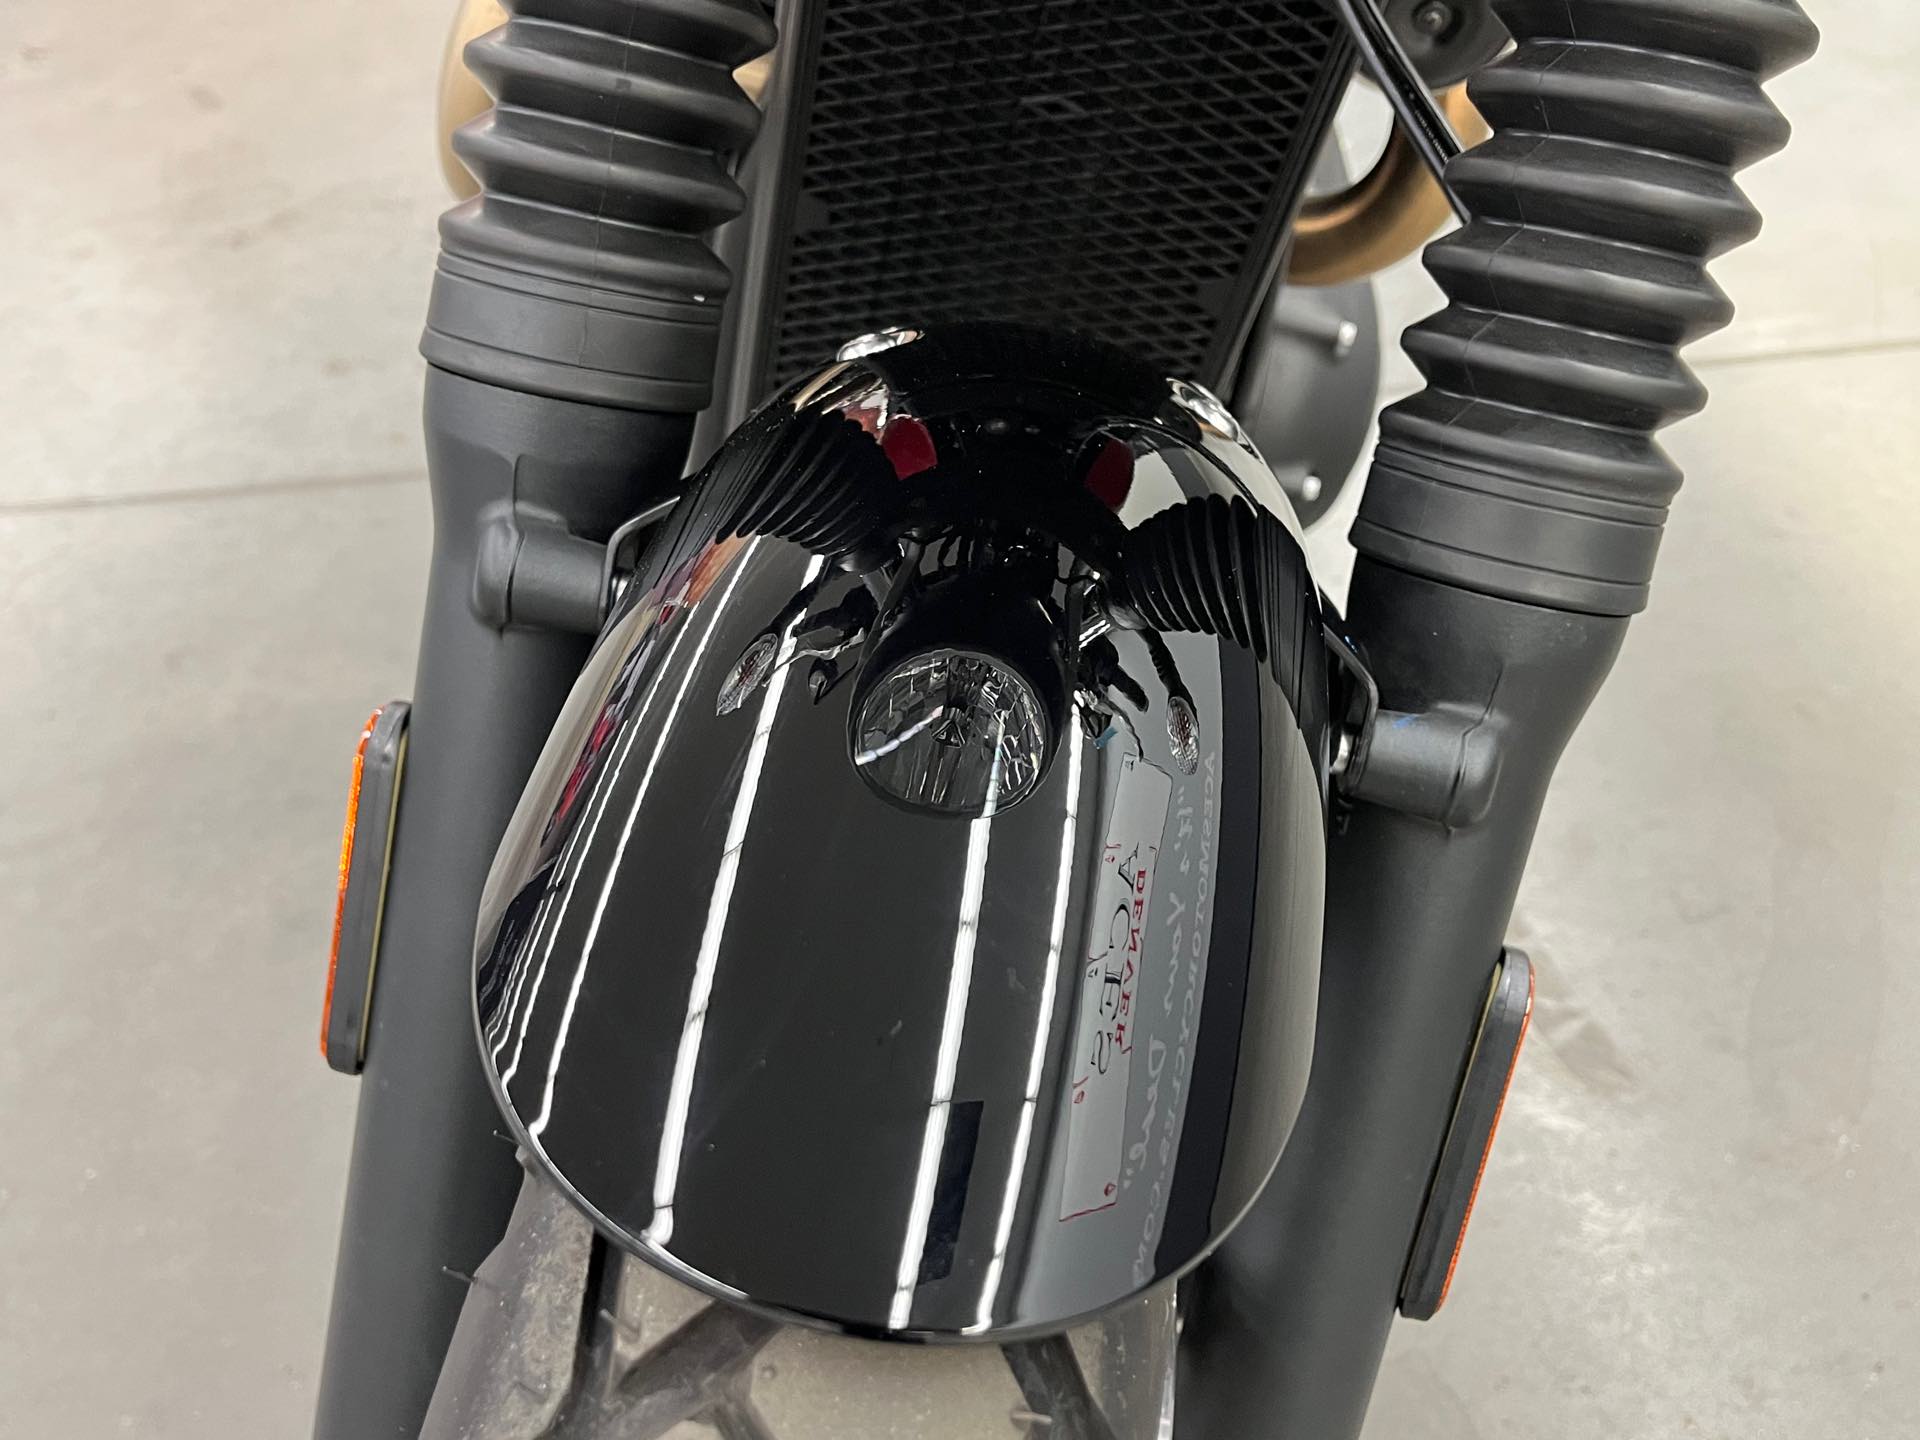 2023 Triumph Scrambler 900 Base at Aces Motorcycles - Denver